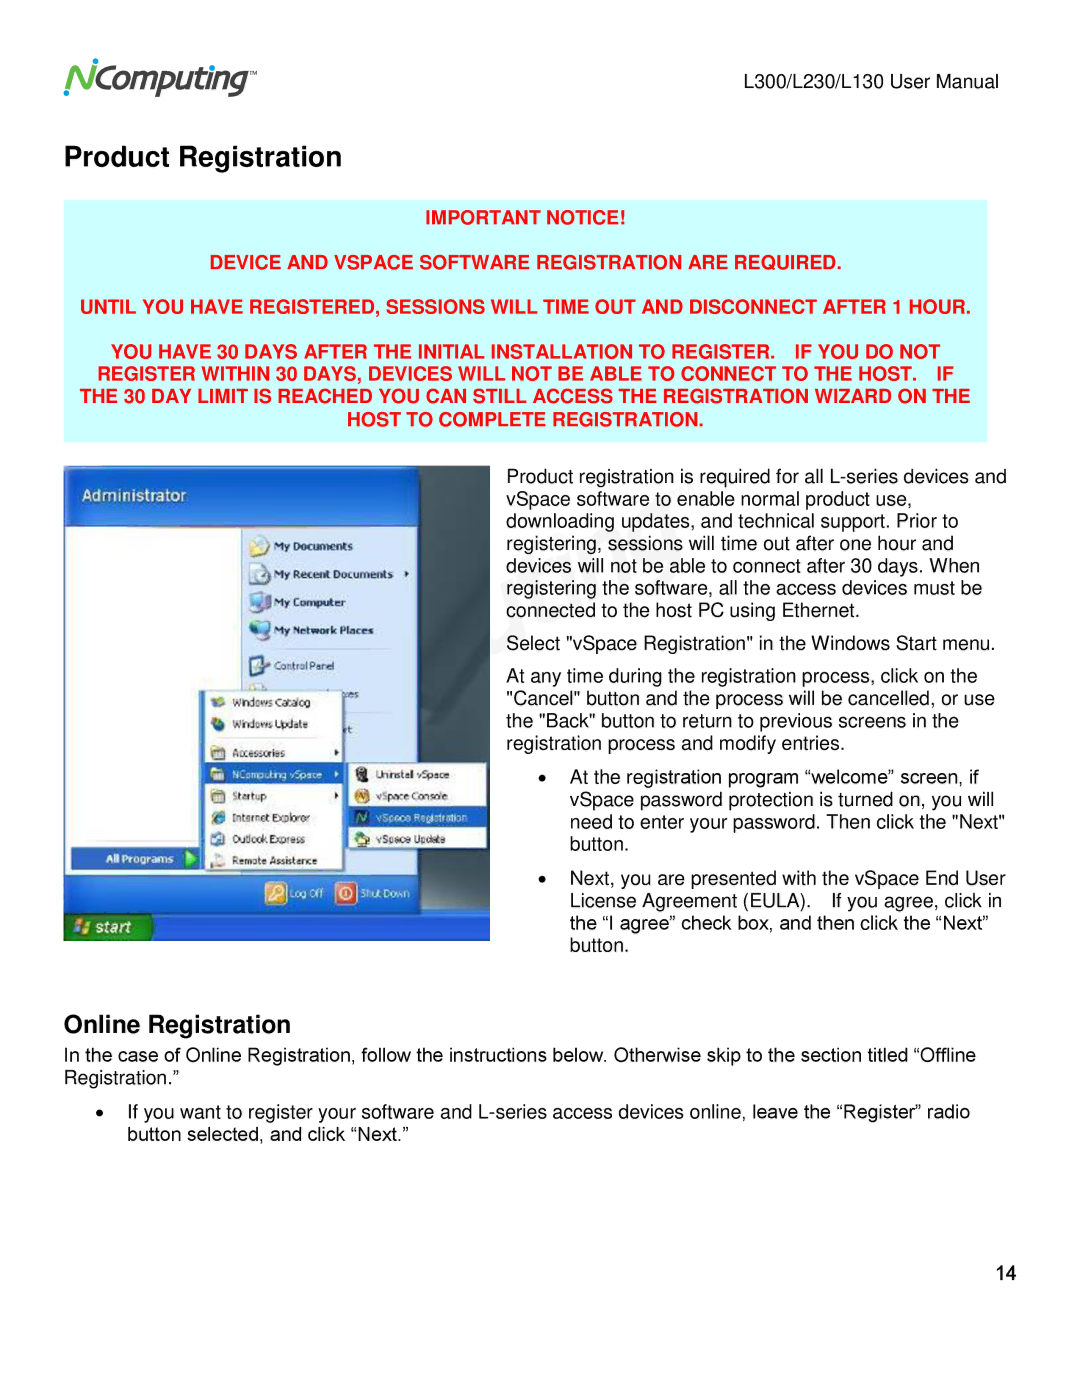 NComputing L300, L230, L130 user manual Product Registration, Online Registration 